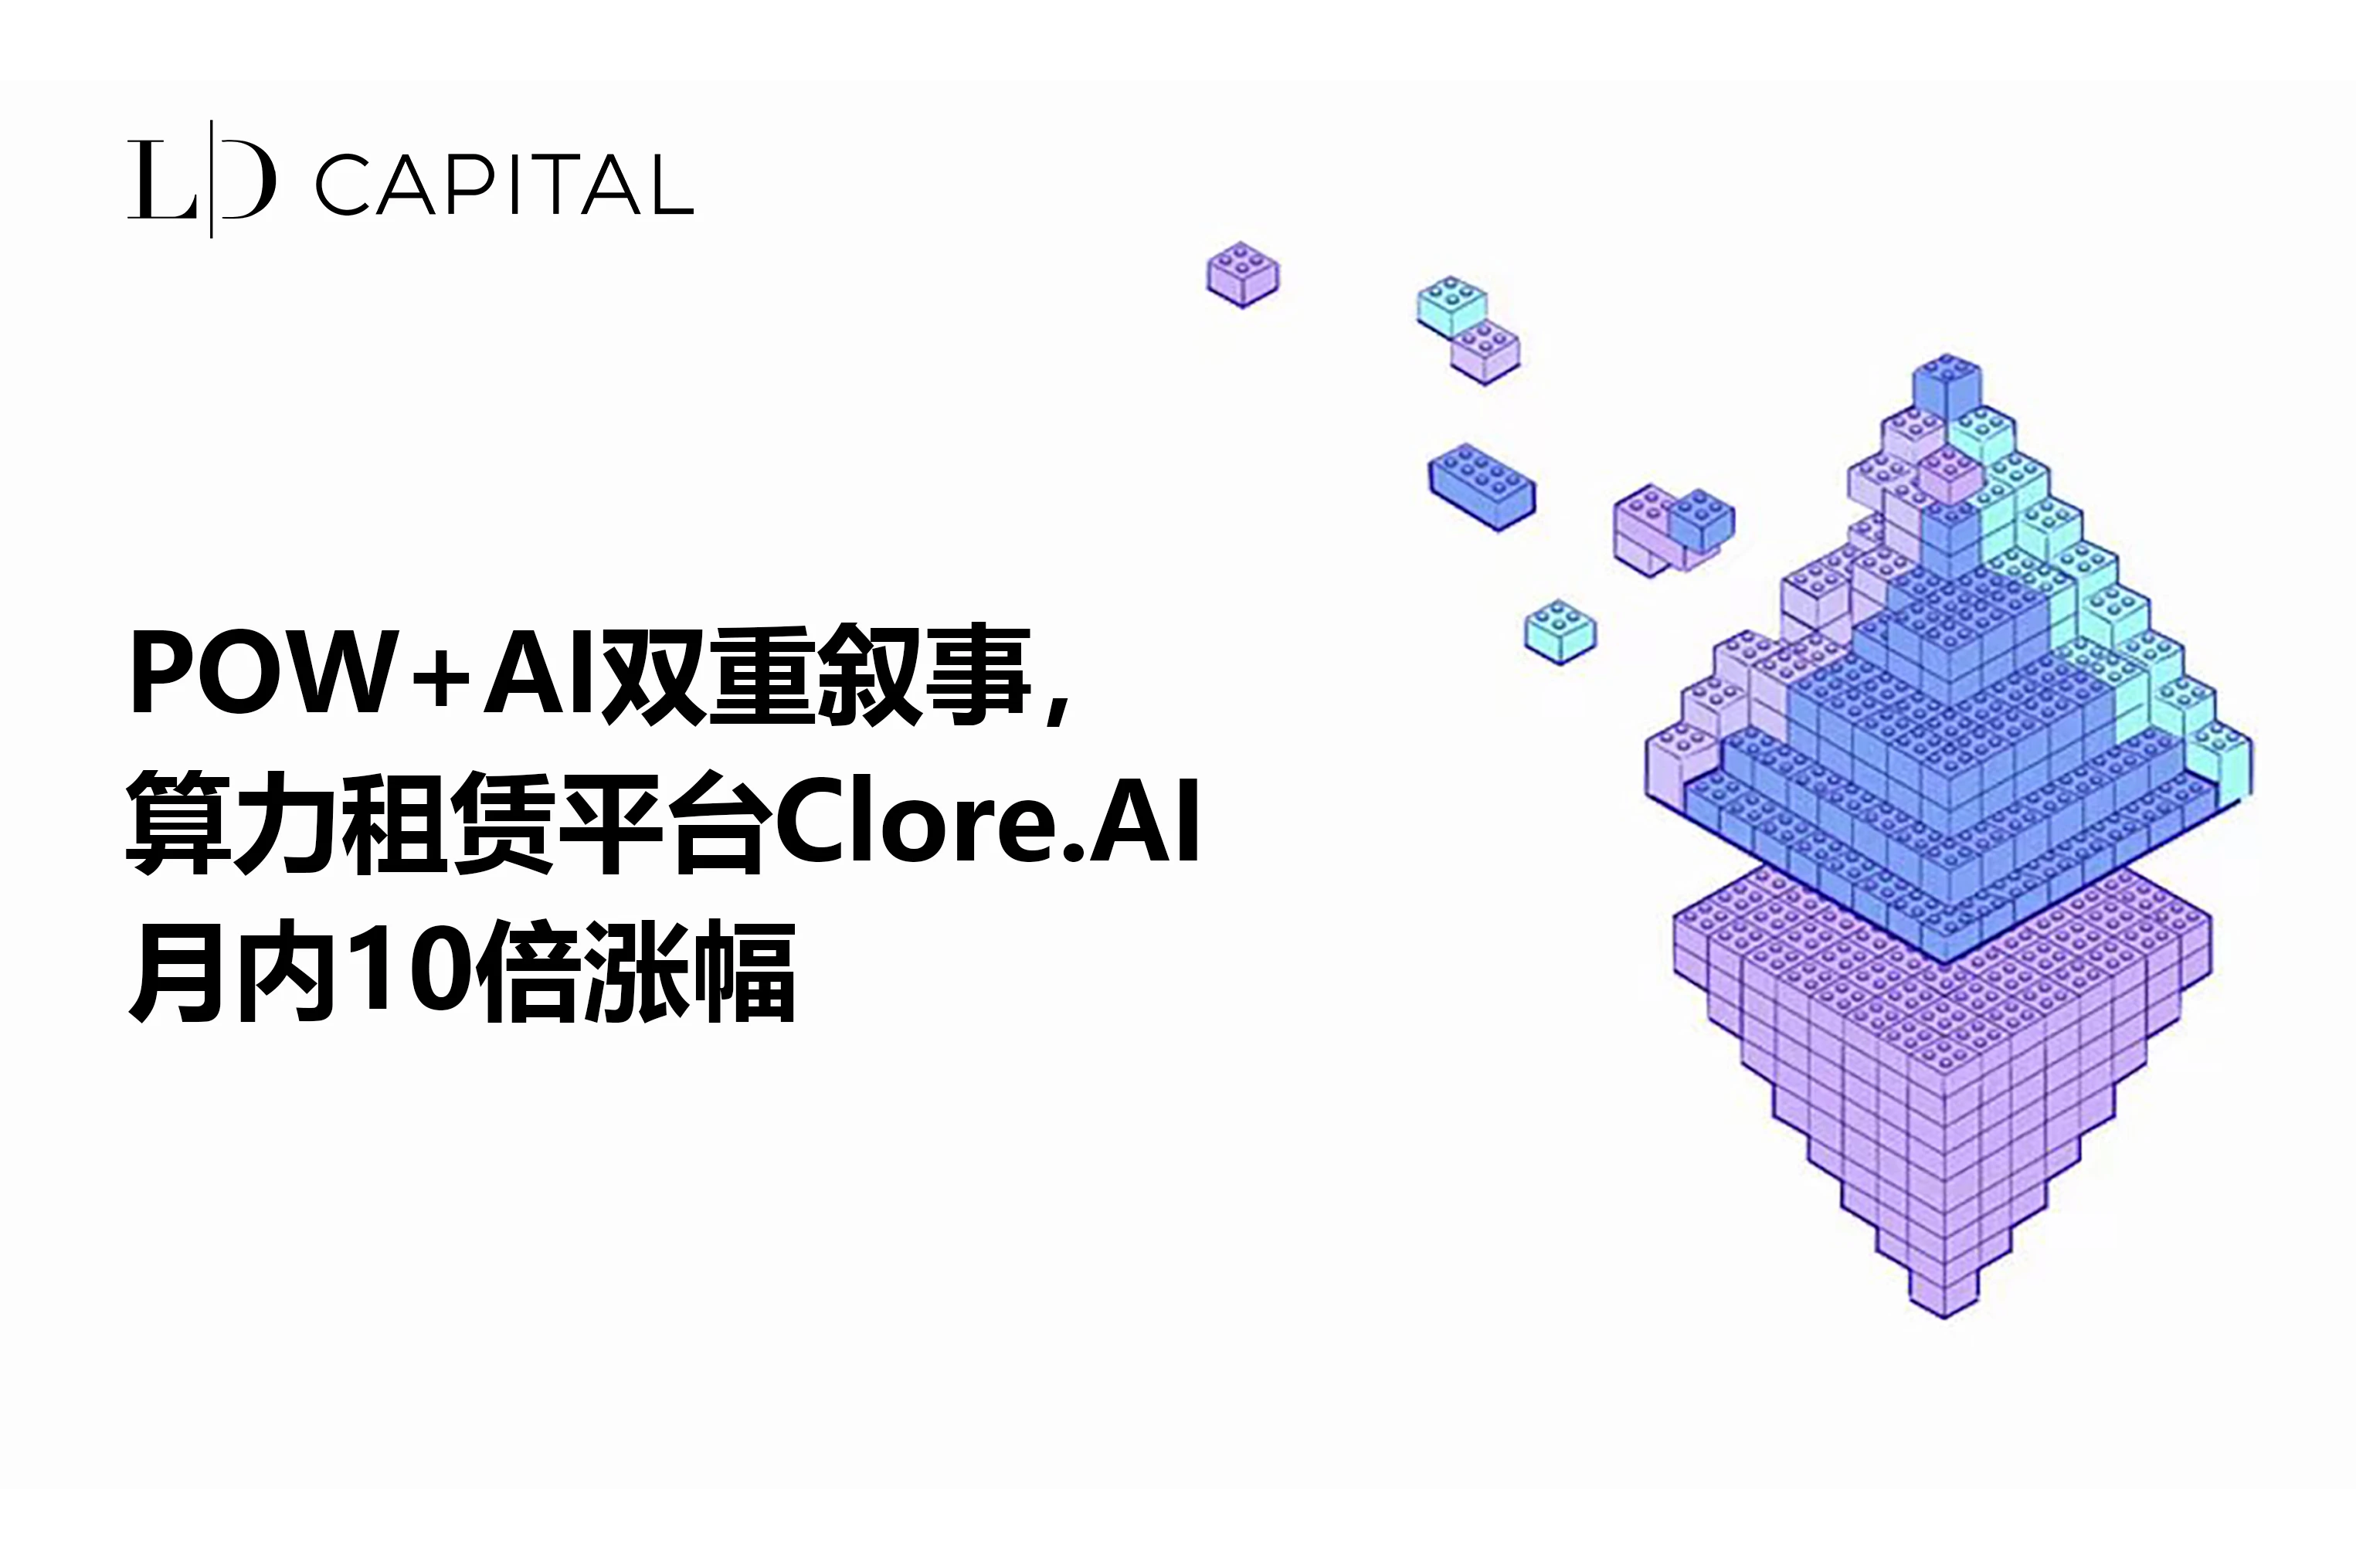 LD Capital: POW+AI dual narrative, computing power rental platform Clore.AI increased 10 times in the month